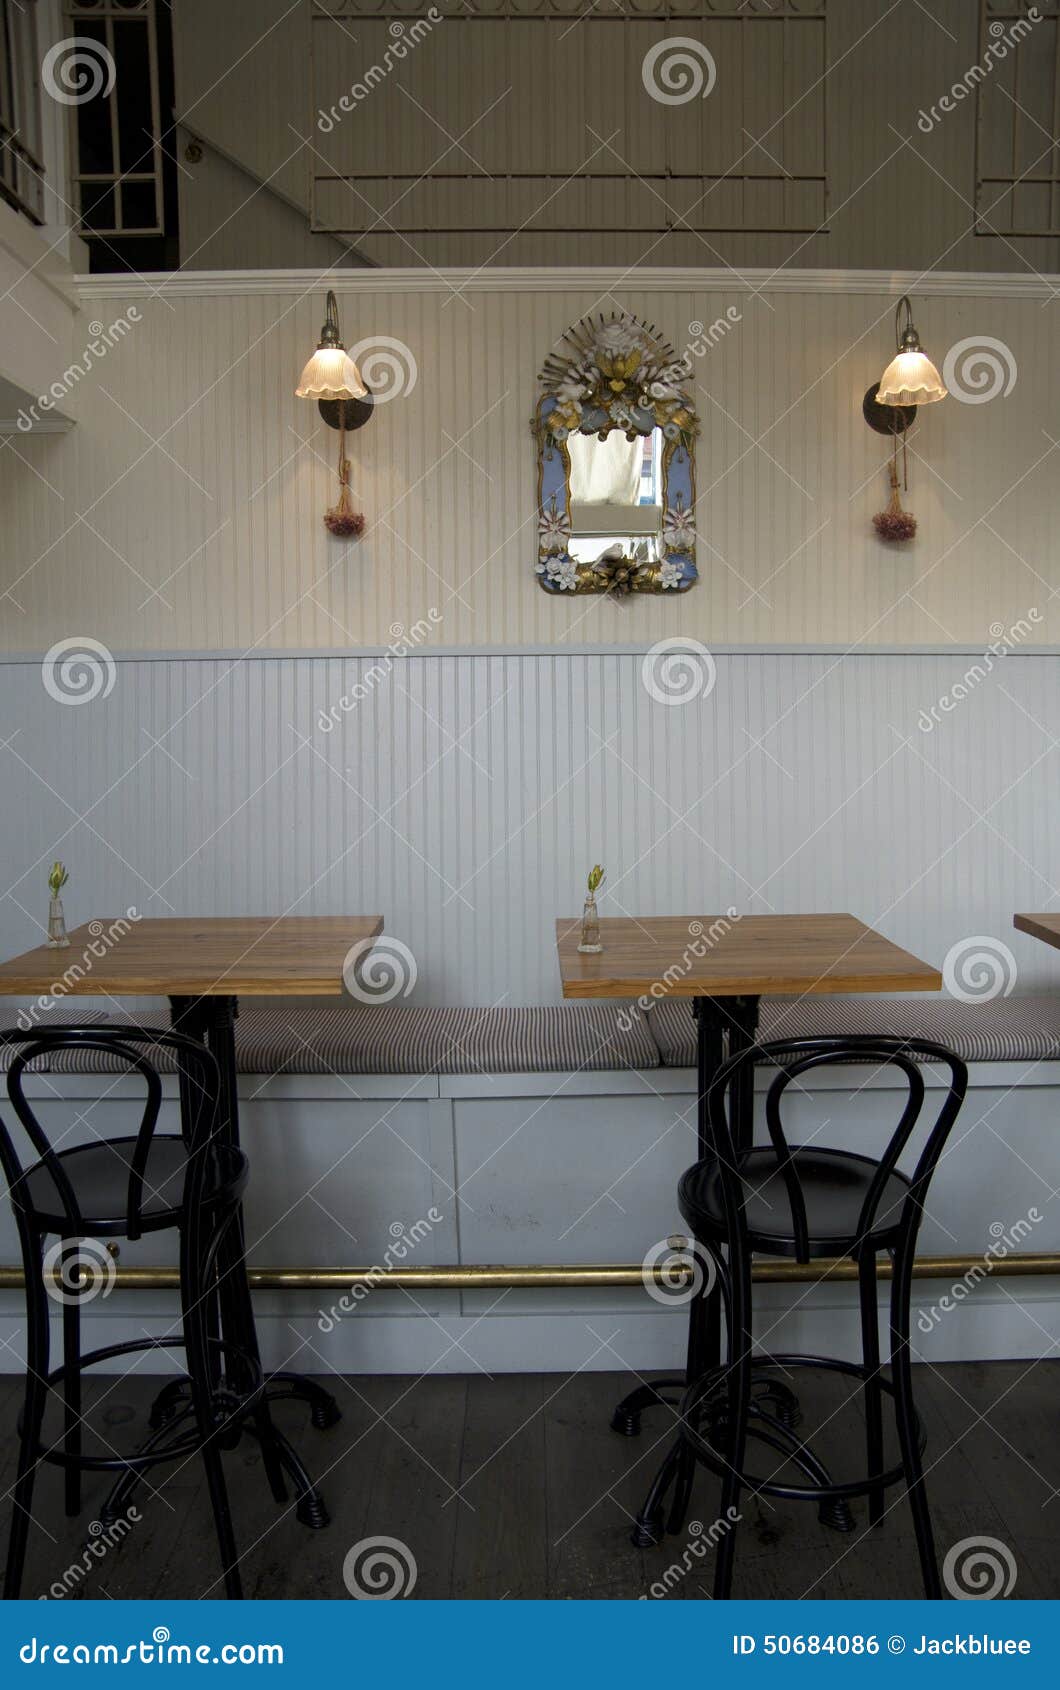 Old Bar Restaurant Interiors Stock Photo Image Of Interior